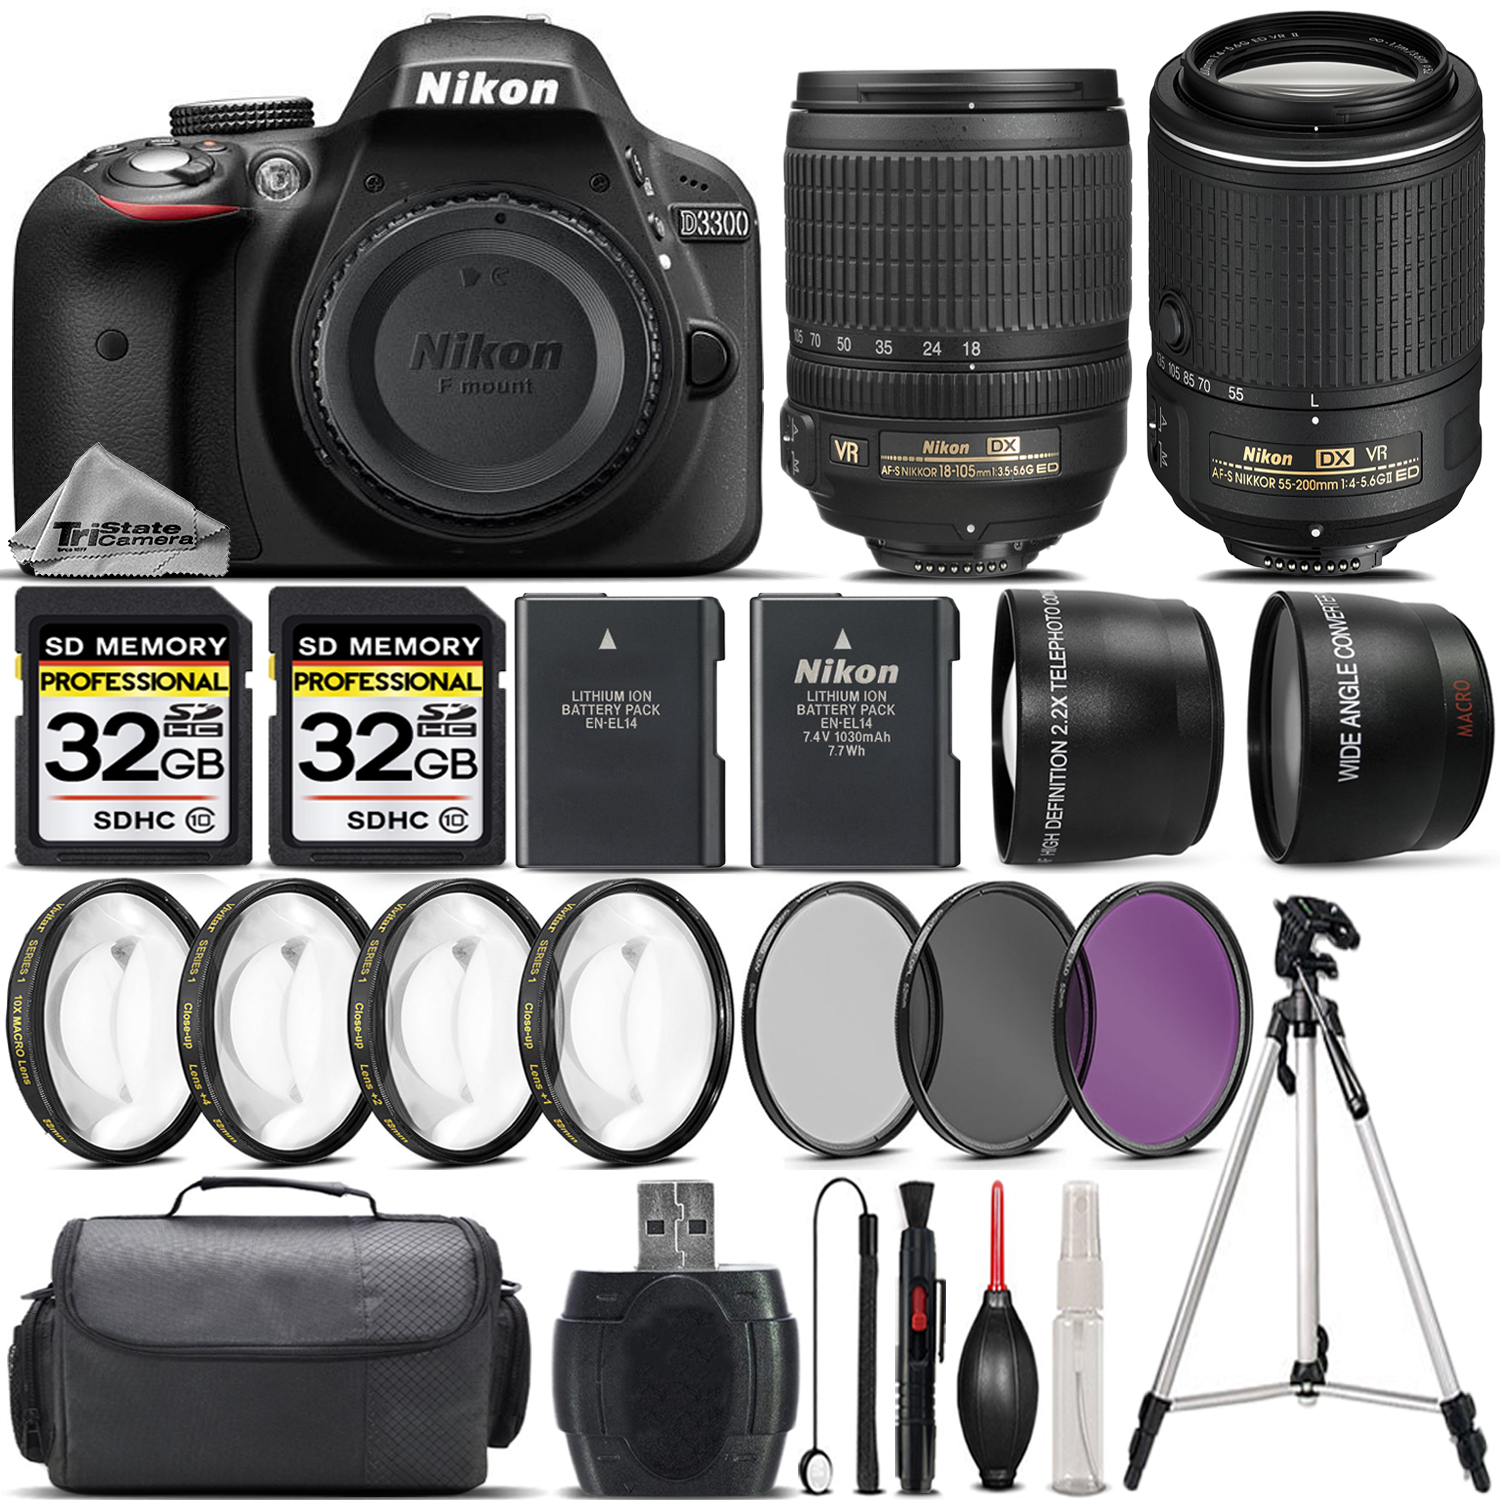 D3300 DSLR Camera with 18-55mm Lens + Nikon 55-200 VR II Lens - 64GB Kit *FREE SHIPPING*